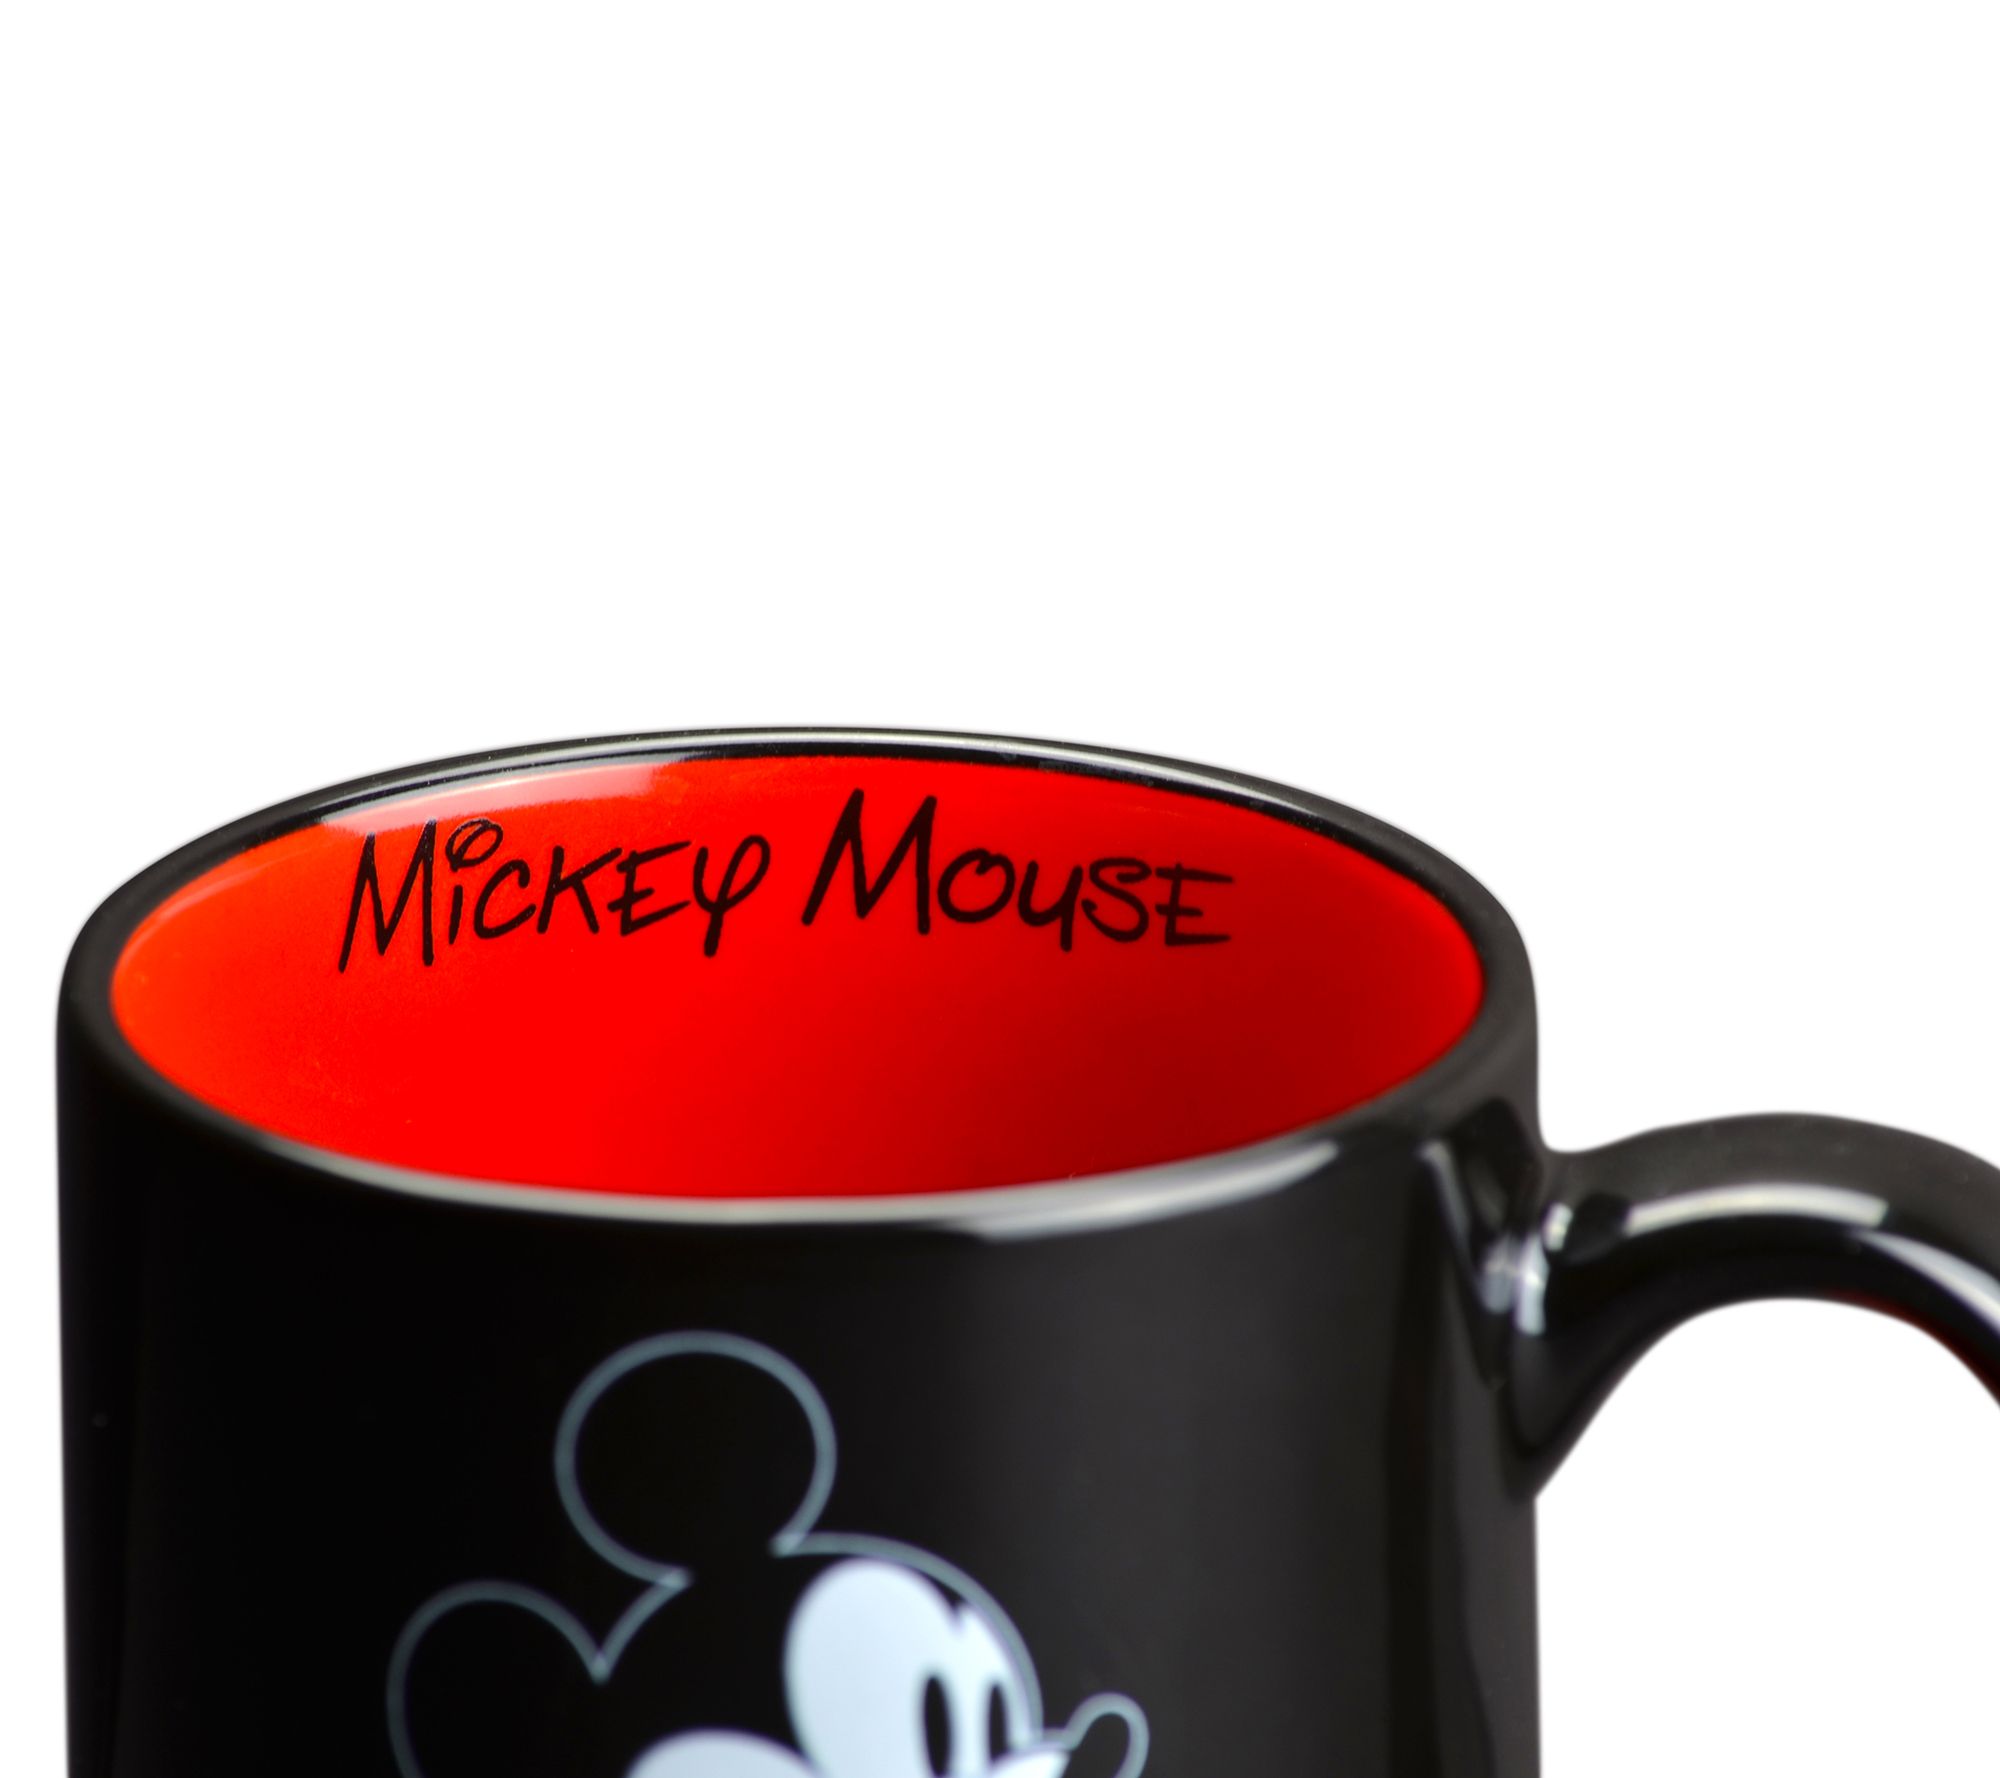 Walt Disney Mickey Mouse Electric Mug Warmer Pad And - Depop